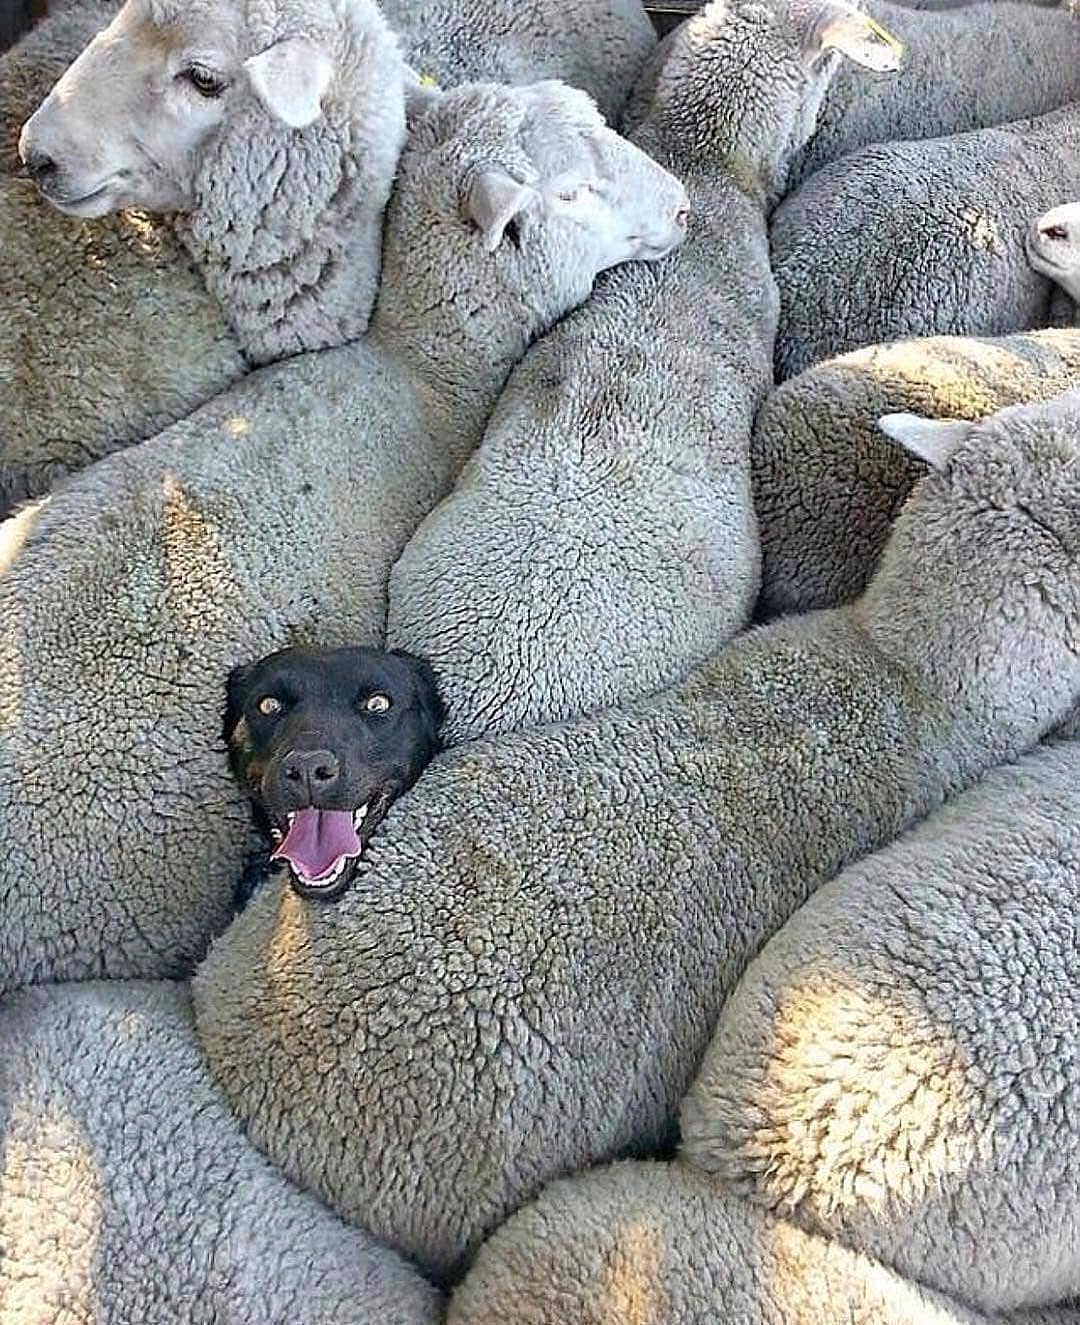 Dog inside the sheep